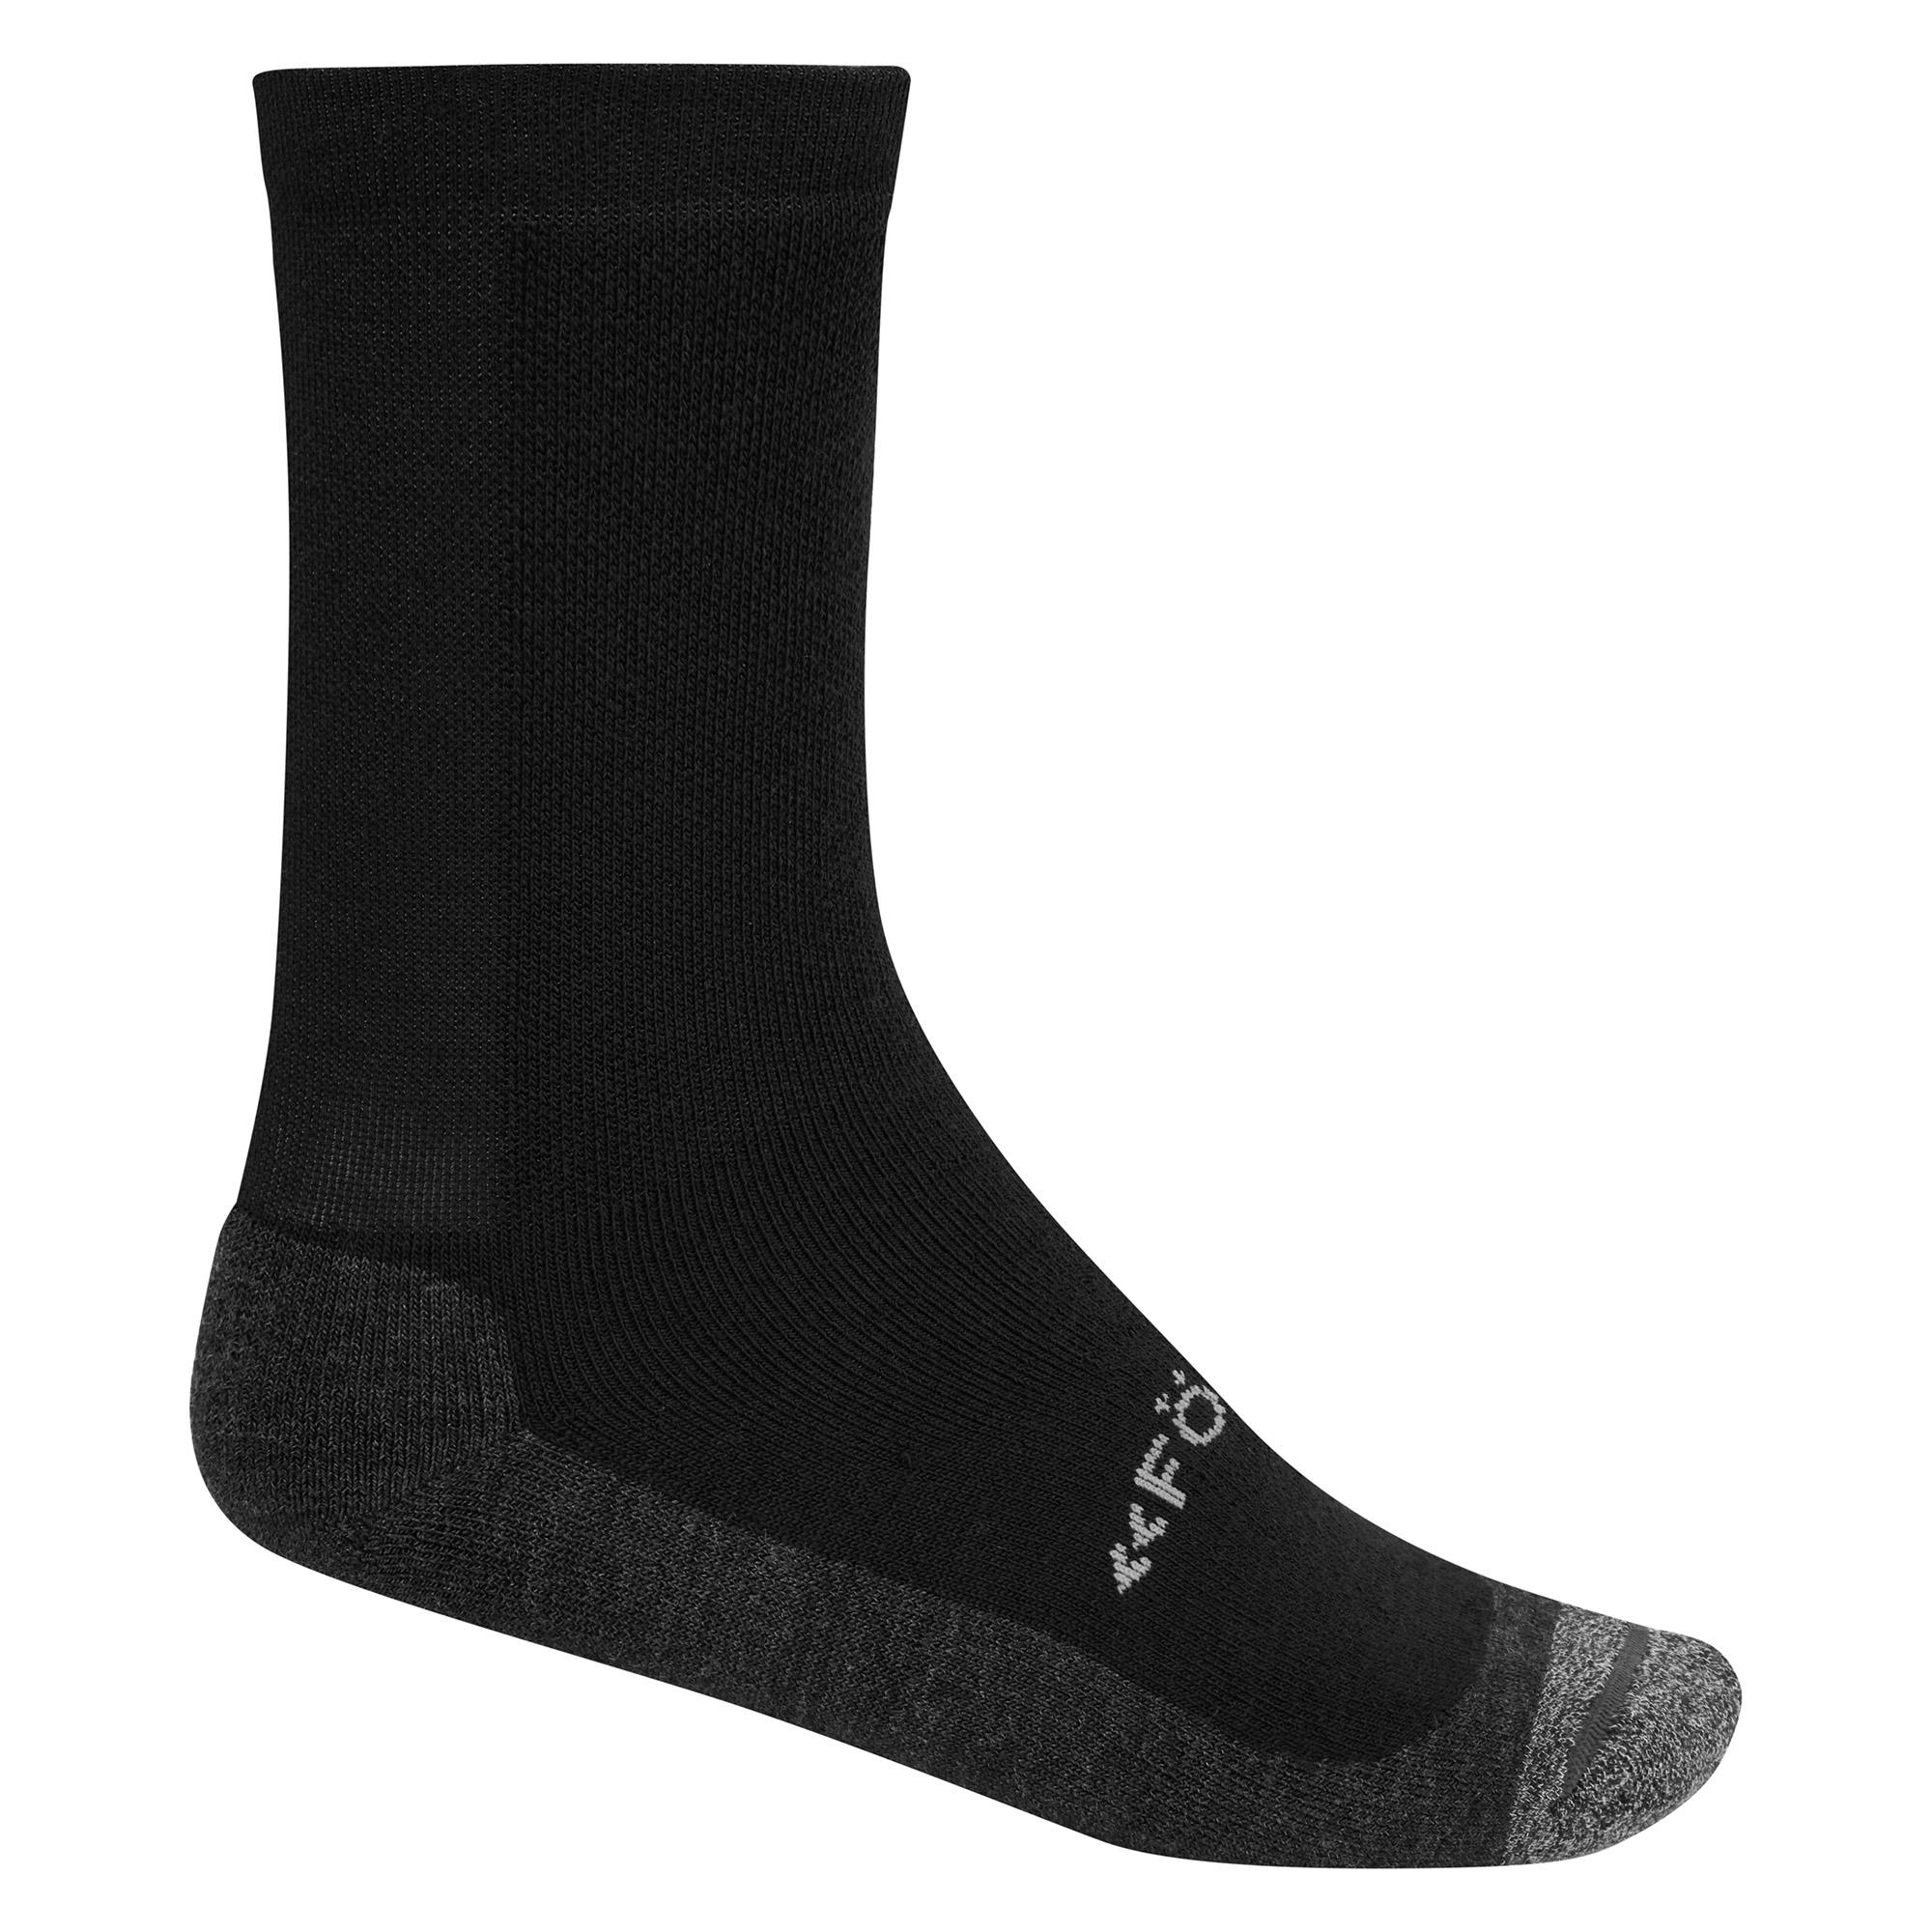 Fhn Winter Sock - Black